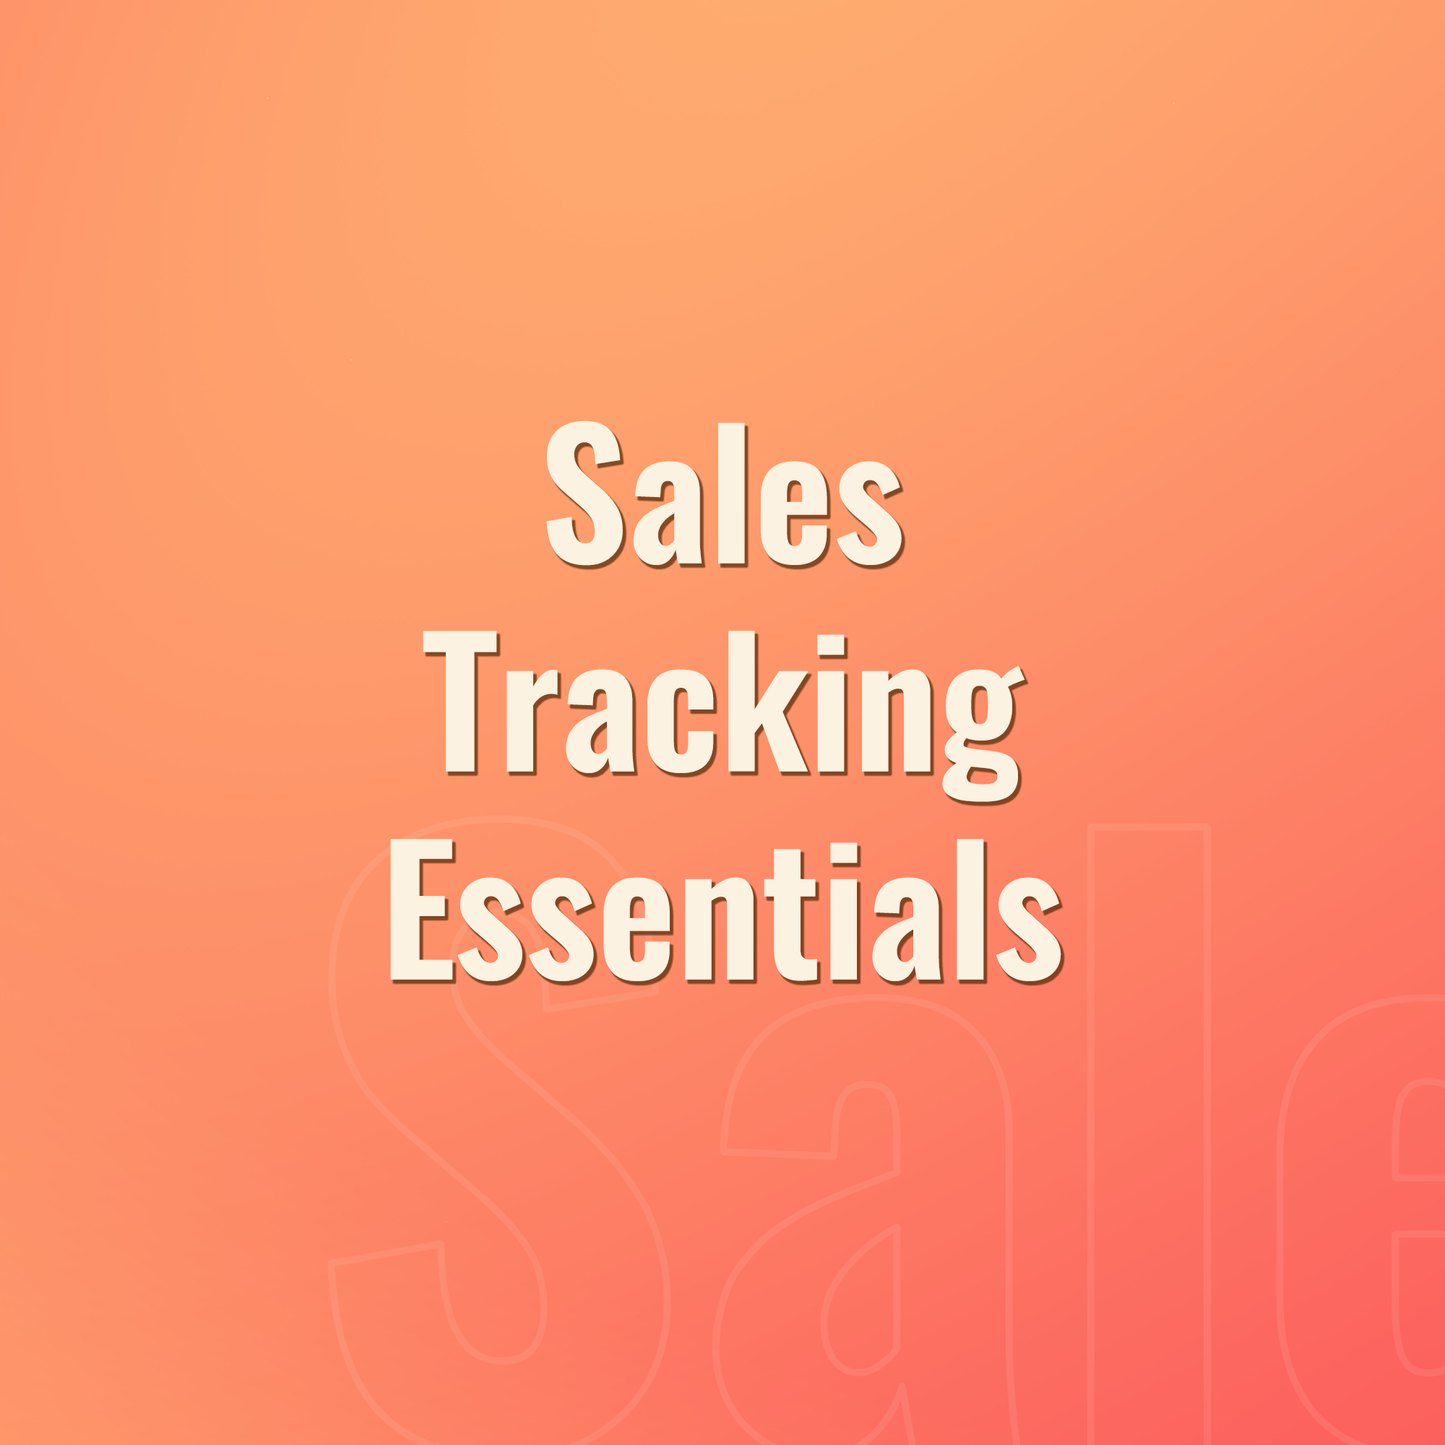 Sales Tracking Essentials